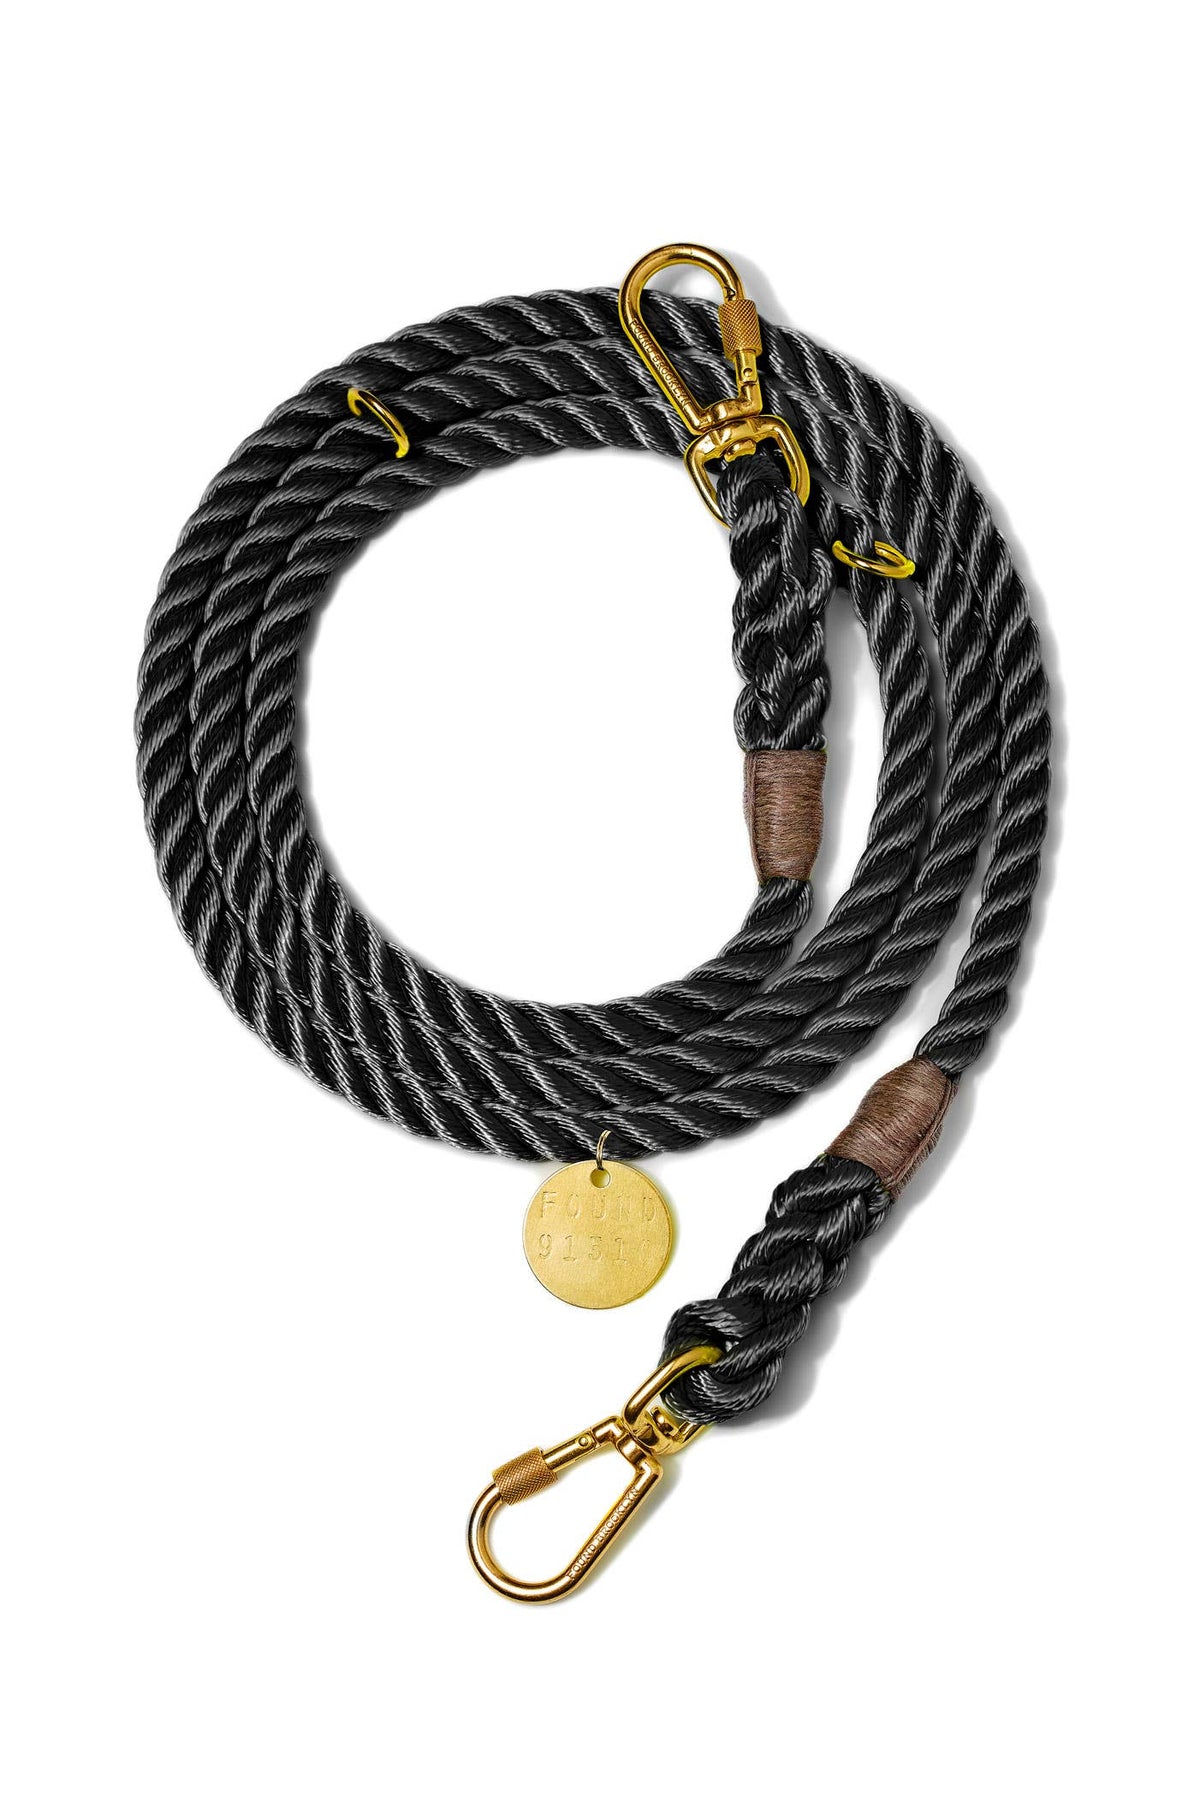 Adjustable Black Rope Dog Leash